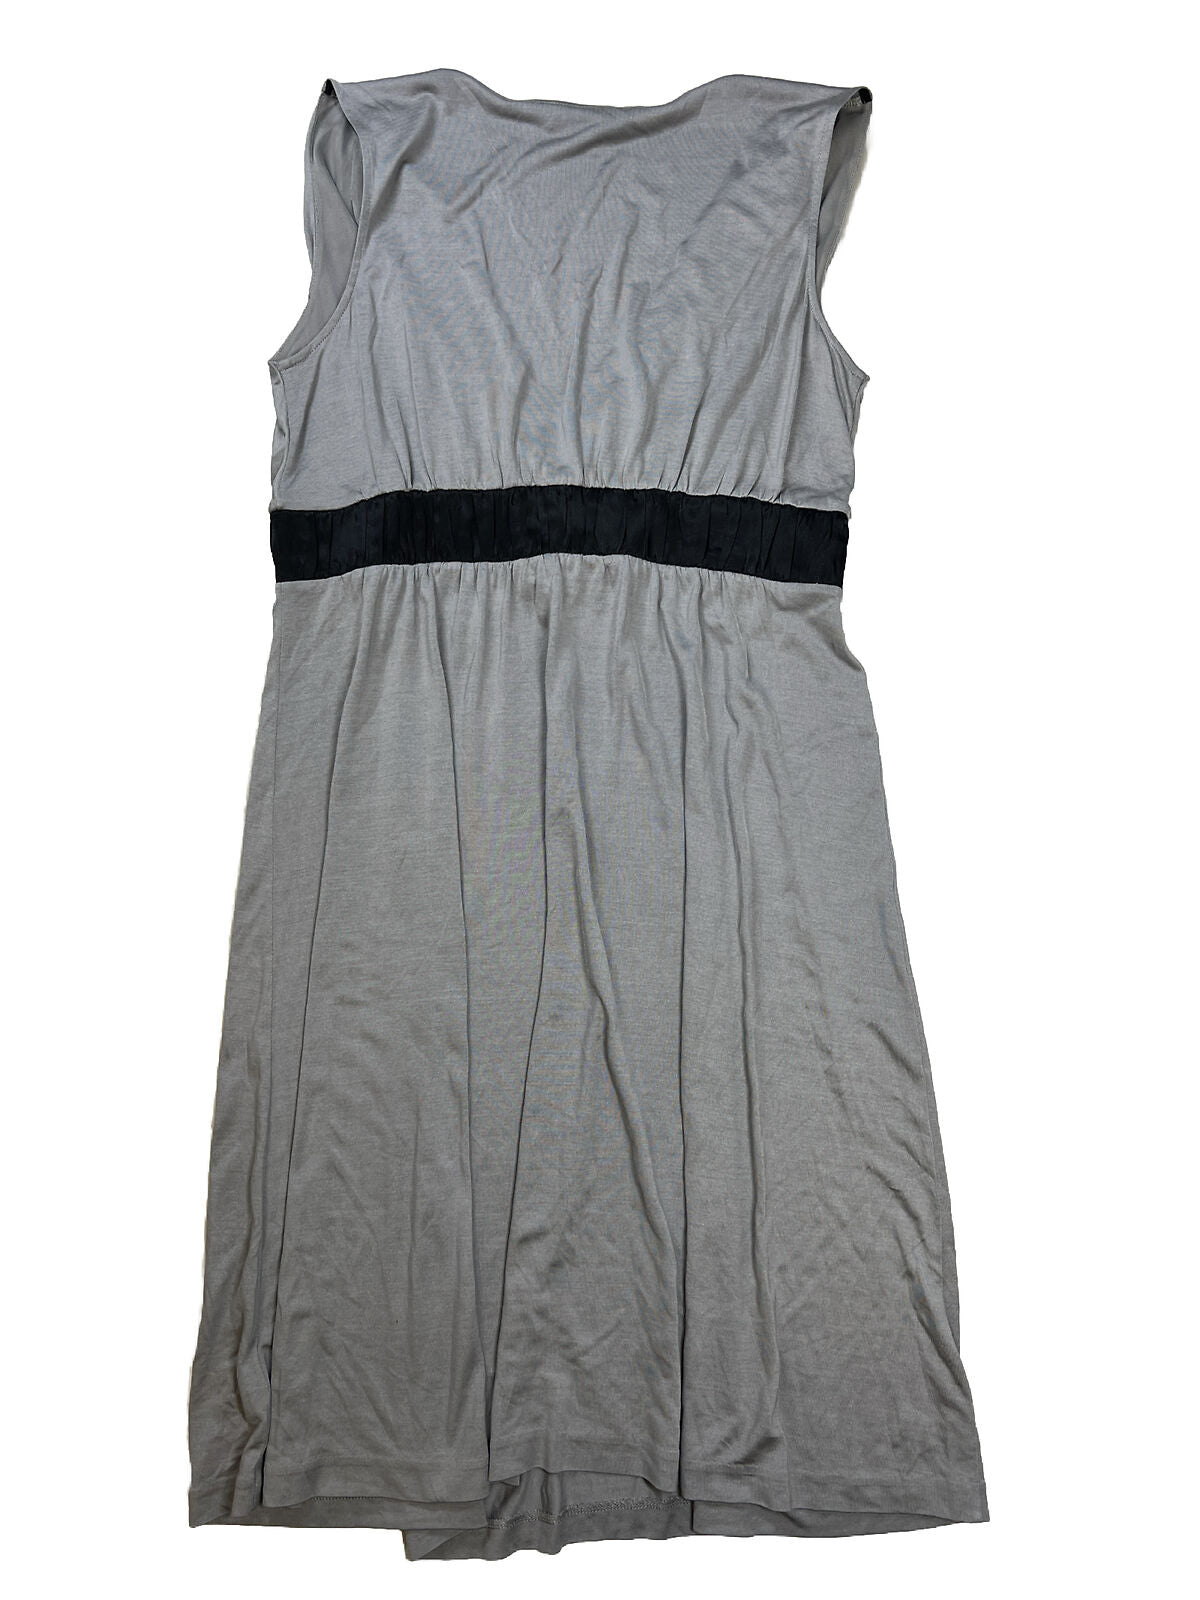 Banana Republic Women's Gray 100% Silk Sleeveless Shift Dress - L